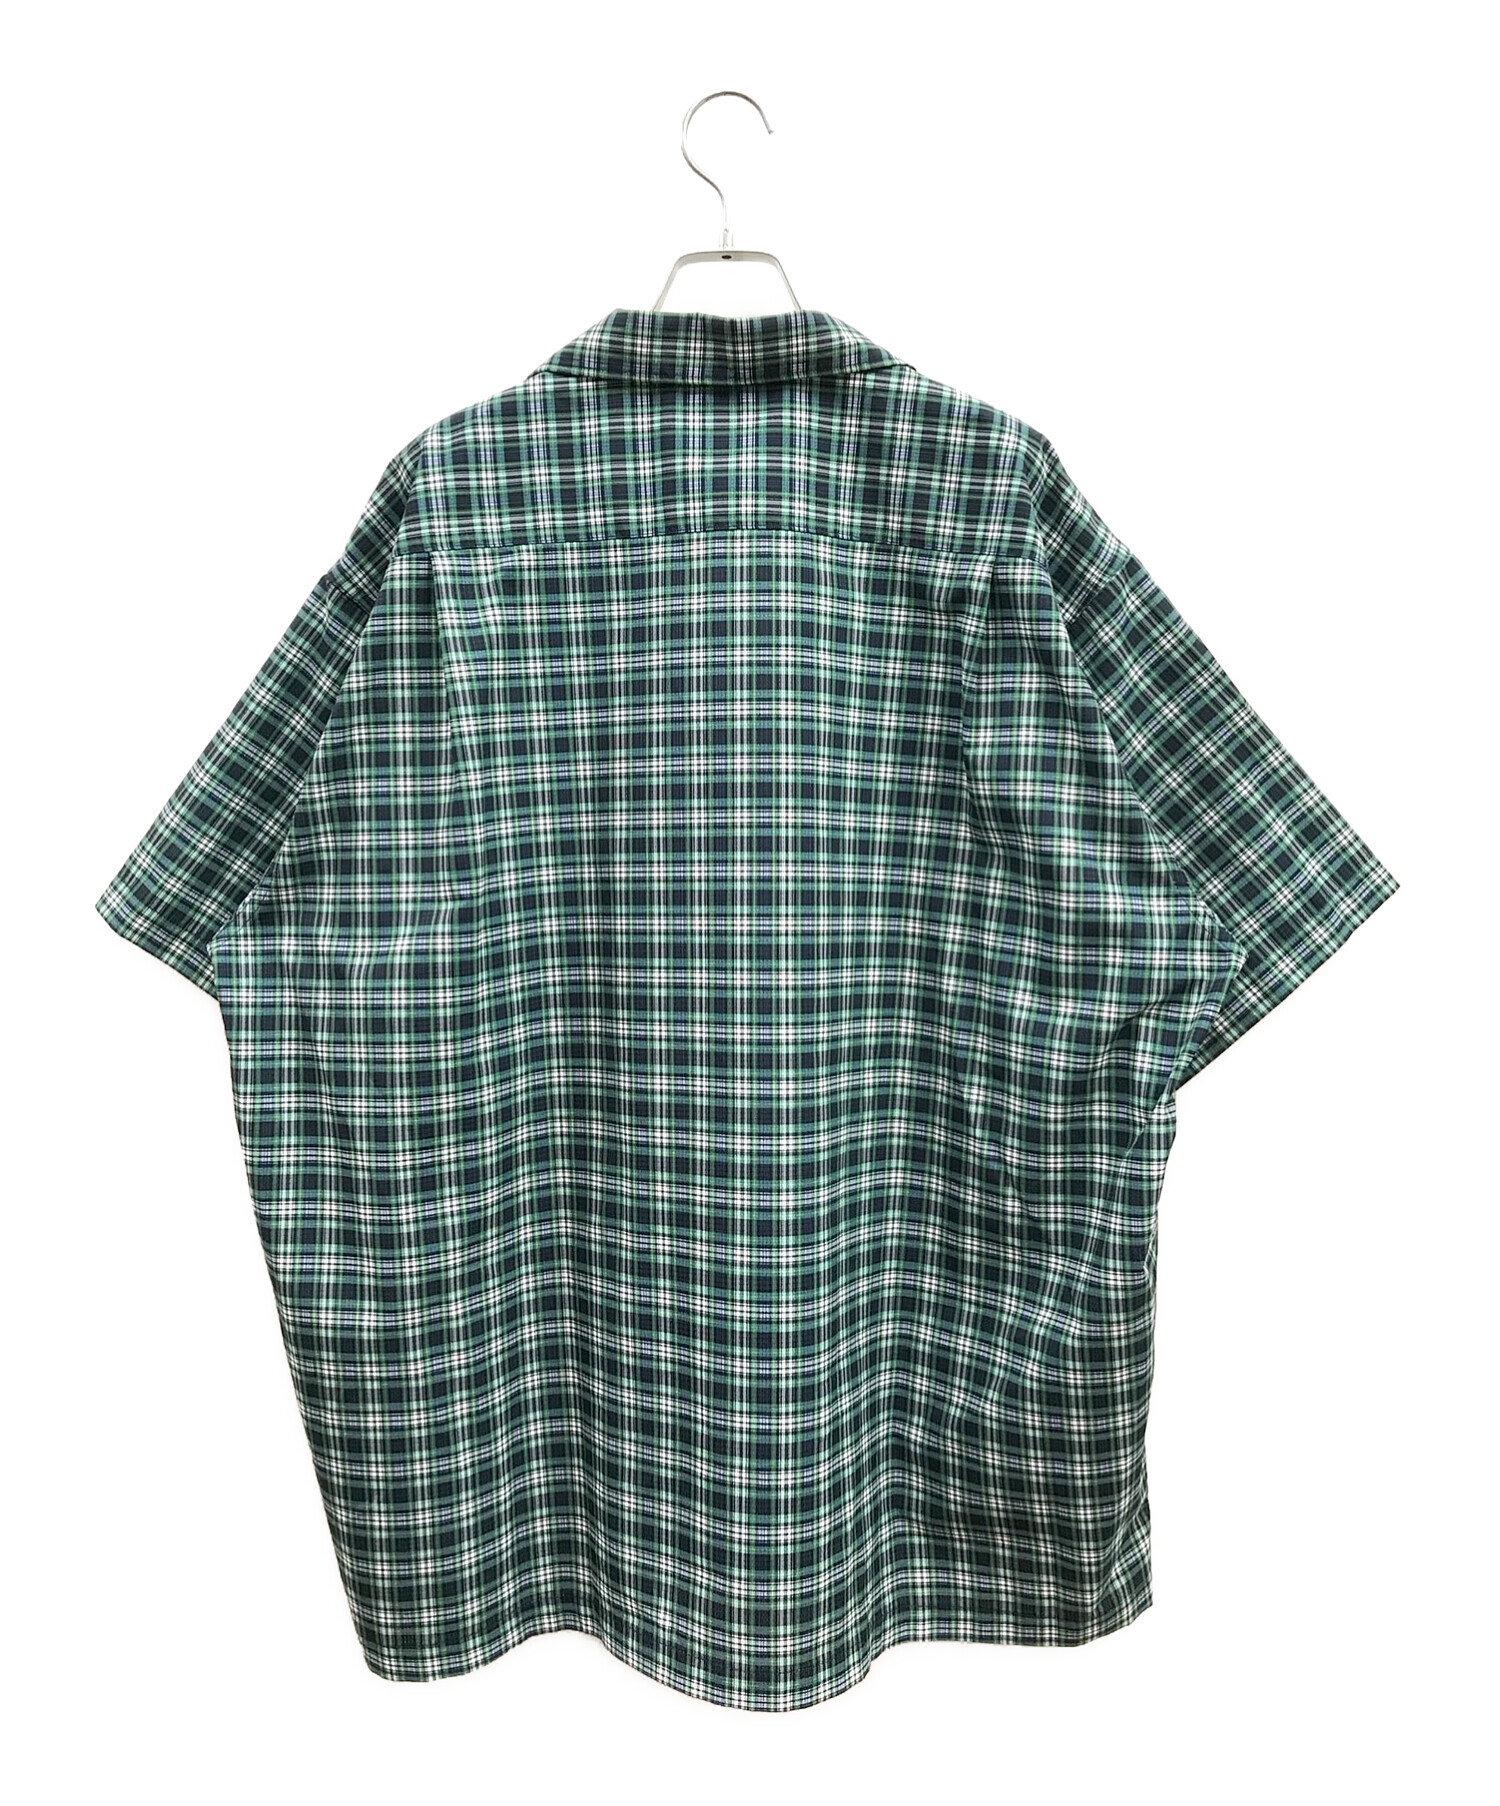 DAIWA PIER39 (ダイワ ピア39) テックレギュラーカラーショートスリーブシャツ / Tech Regular Collar Shirts  S/S グリーン サイズ:L